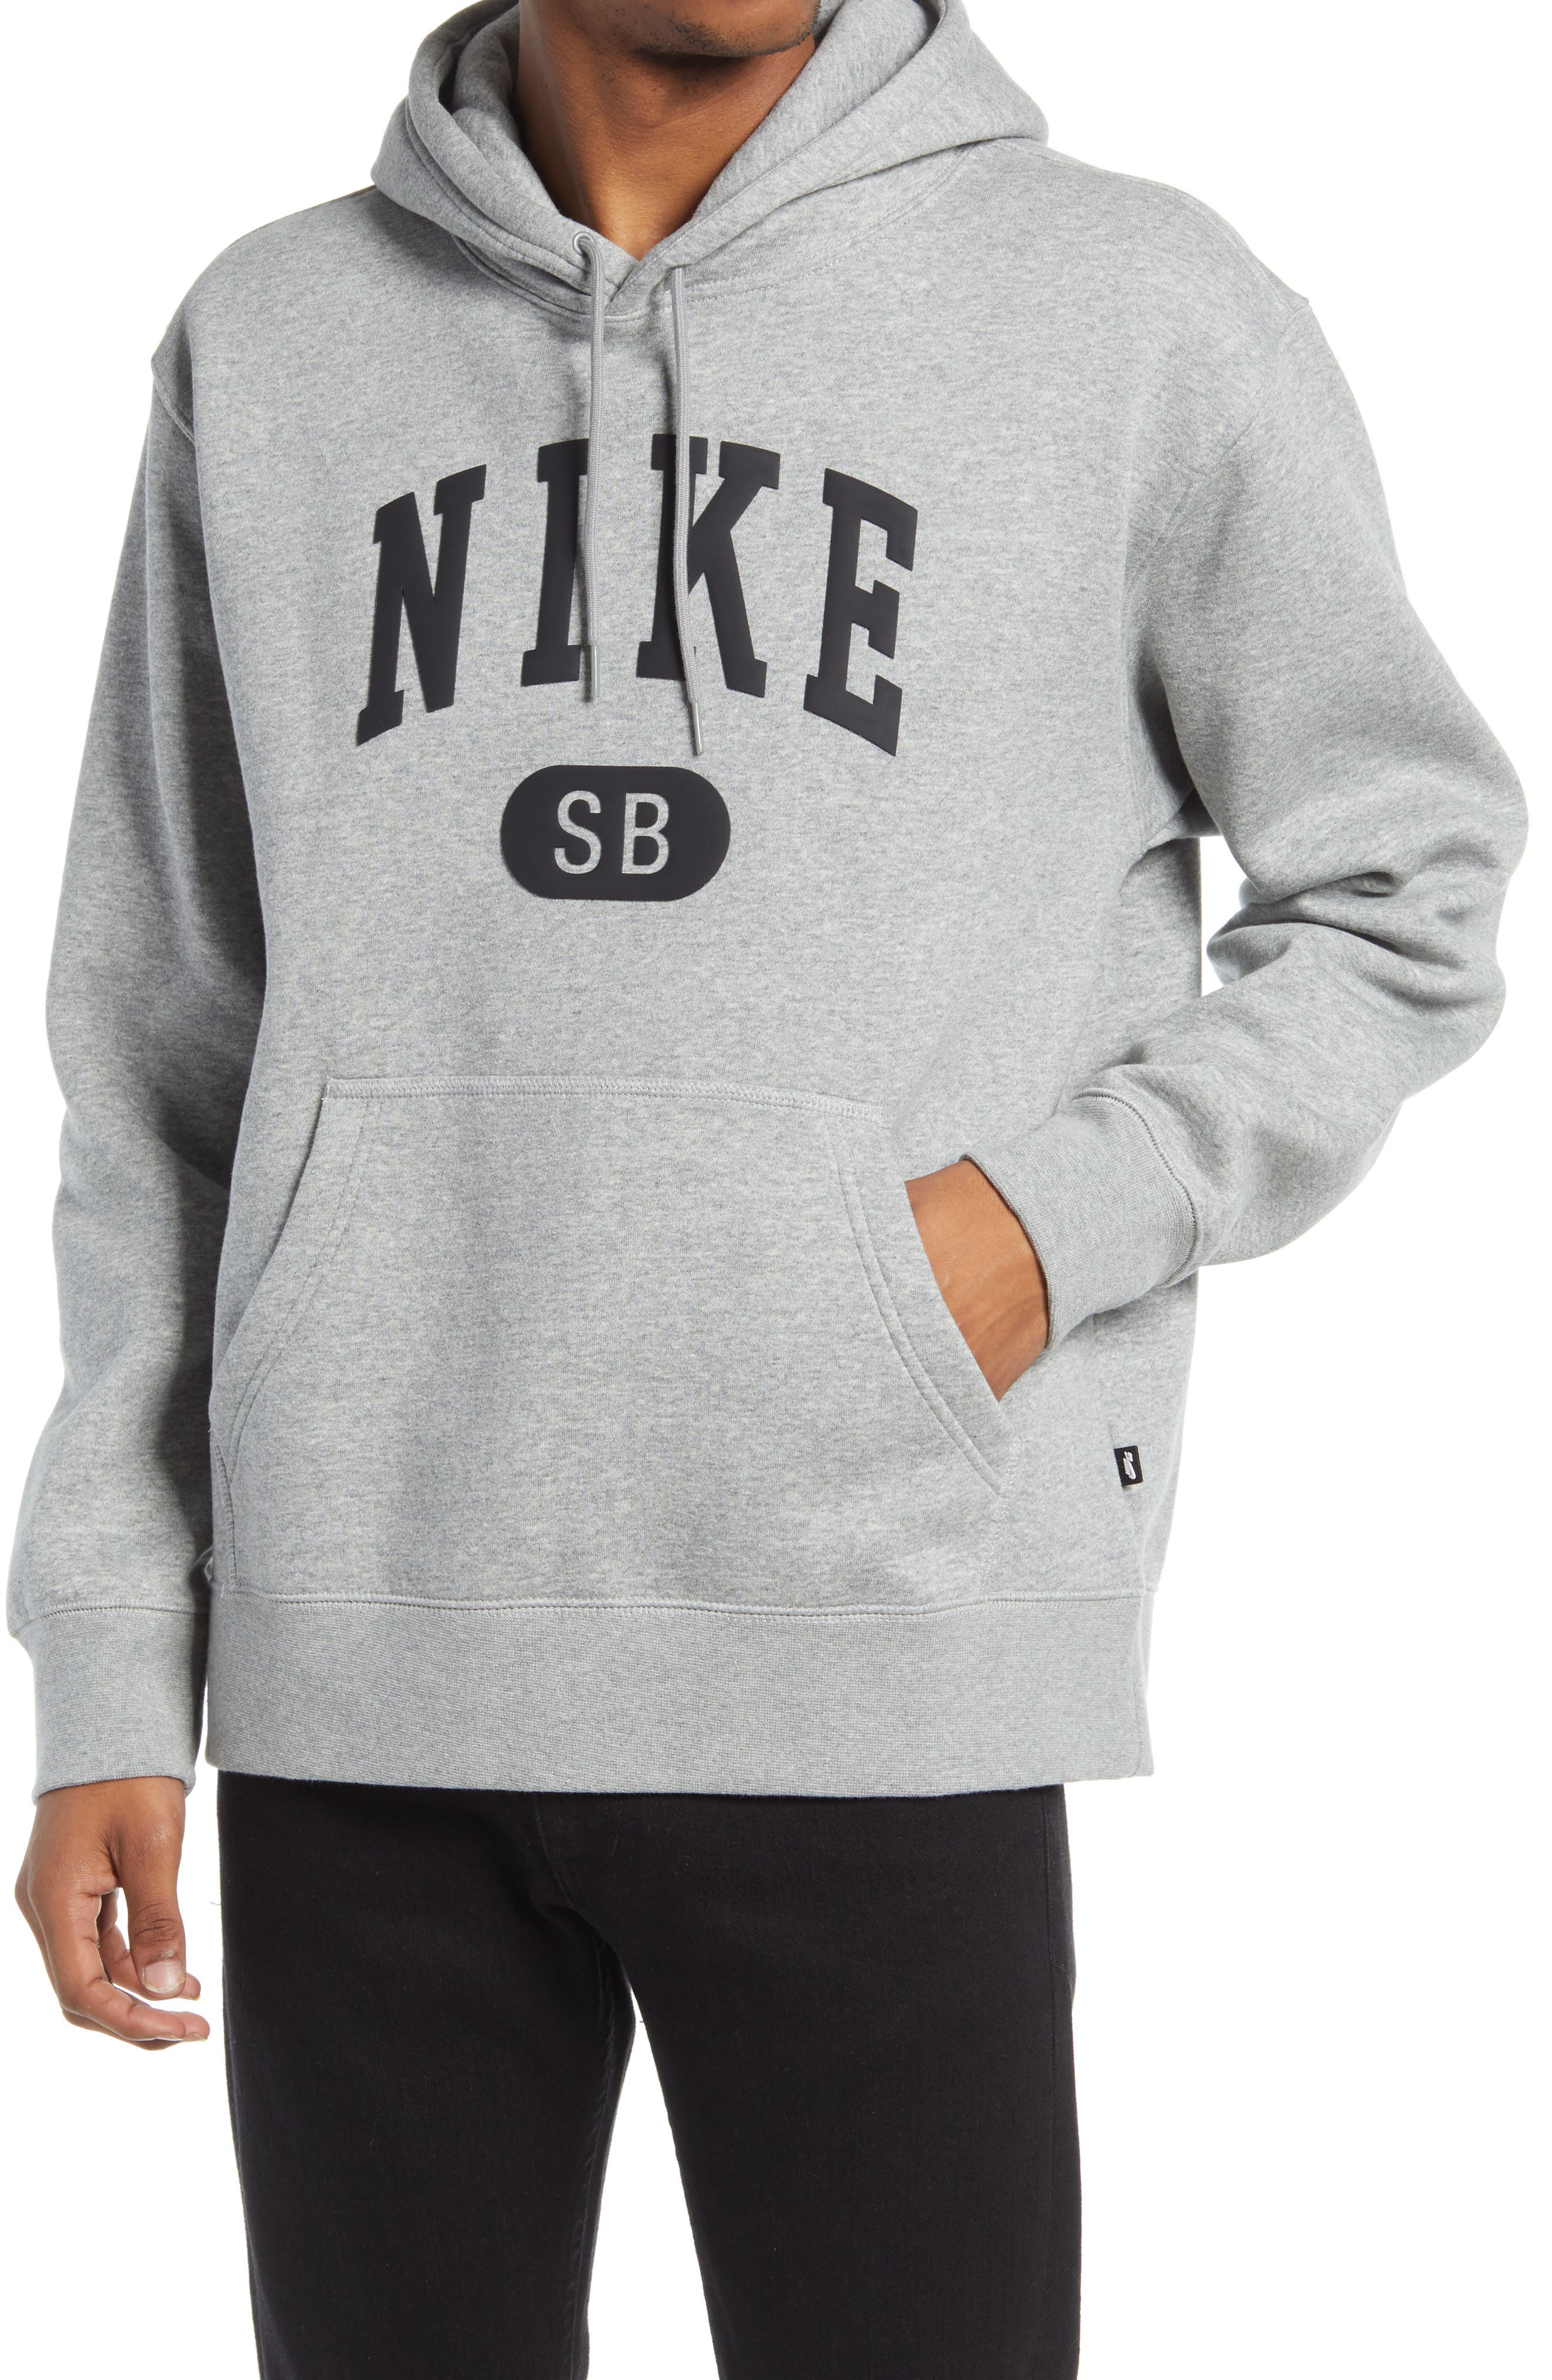 Men's Nike SB Clothing Sale \u0026 Clearance 